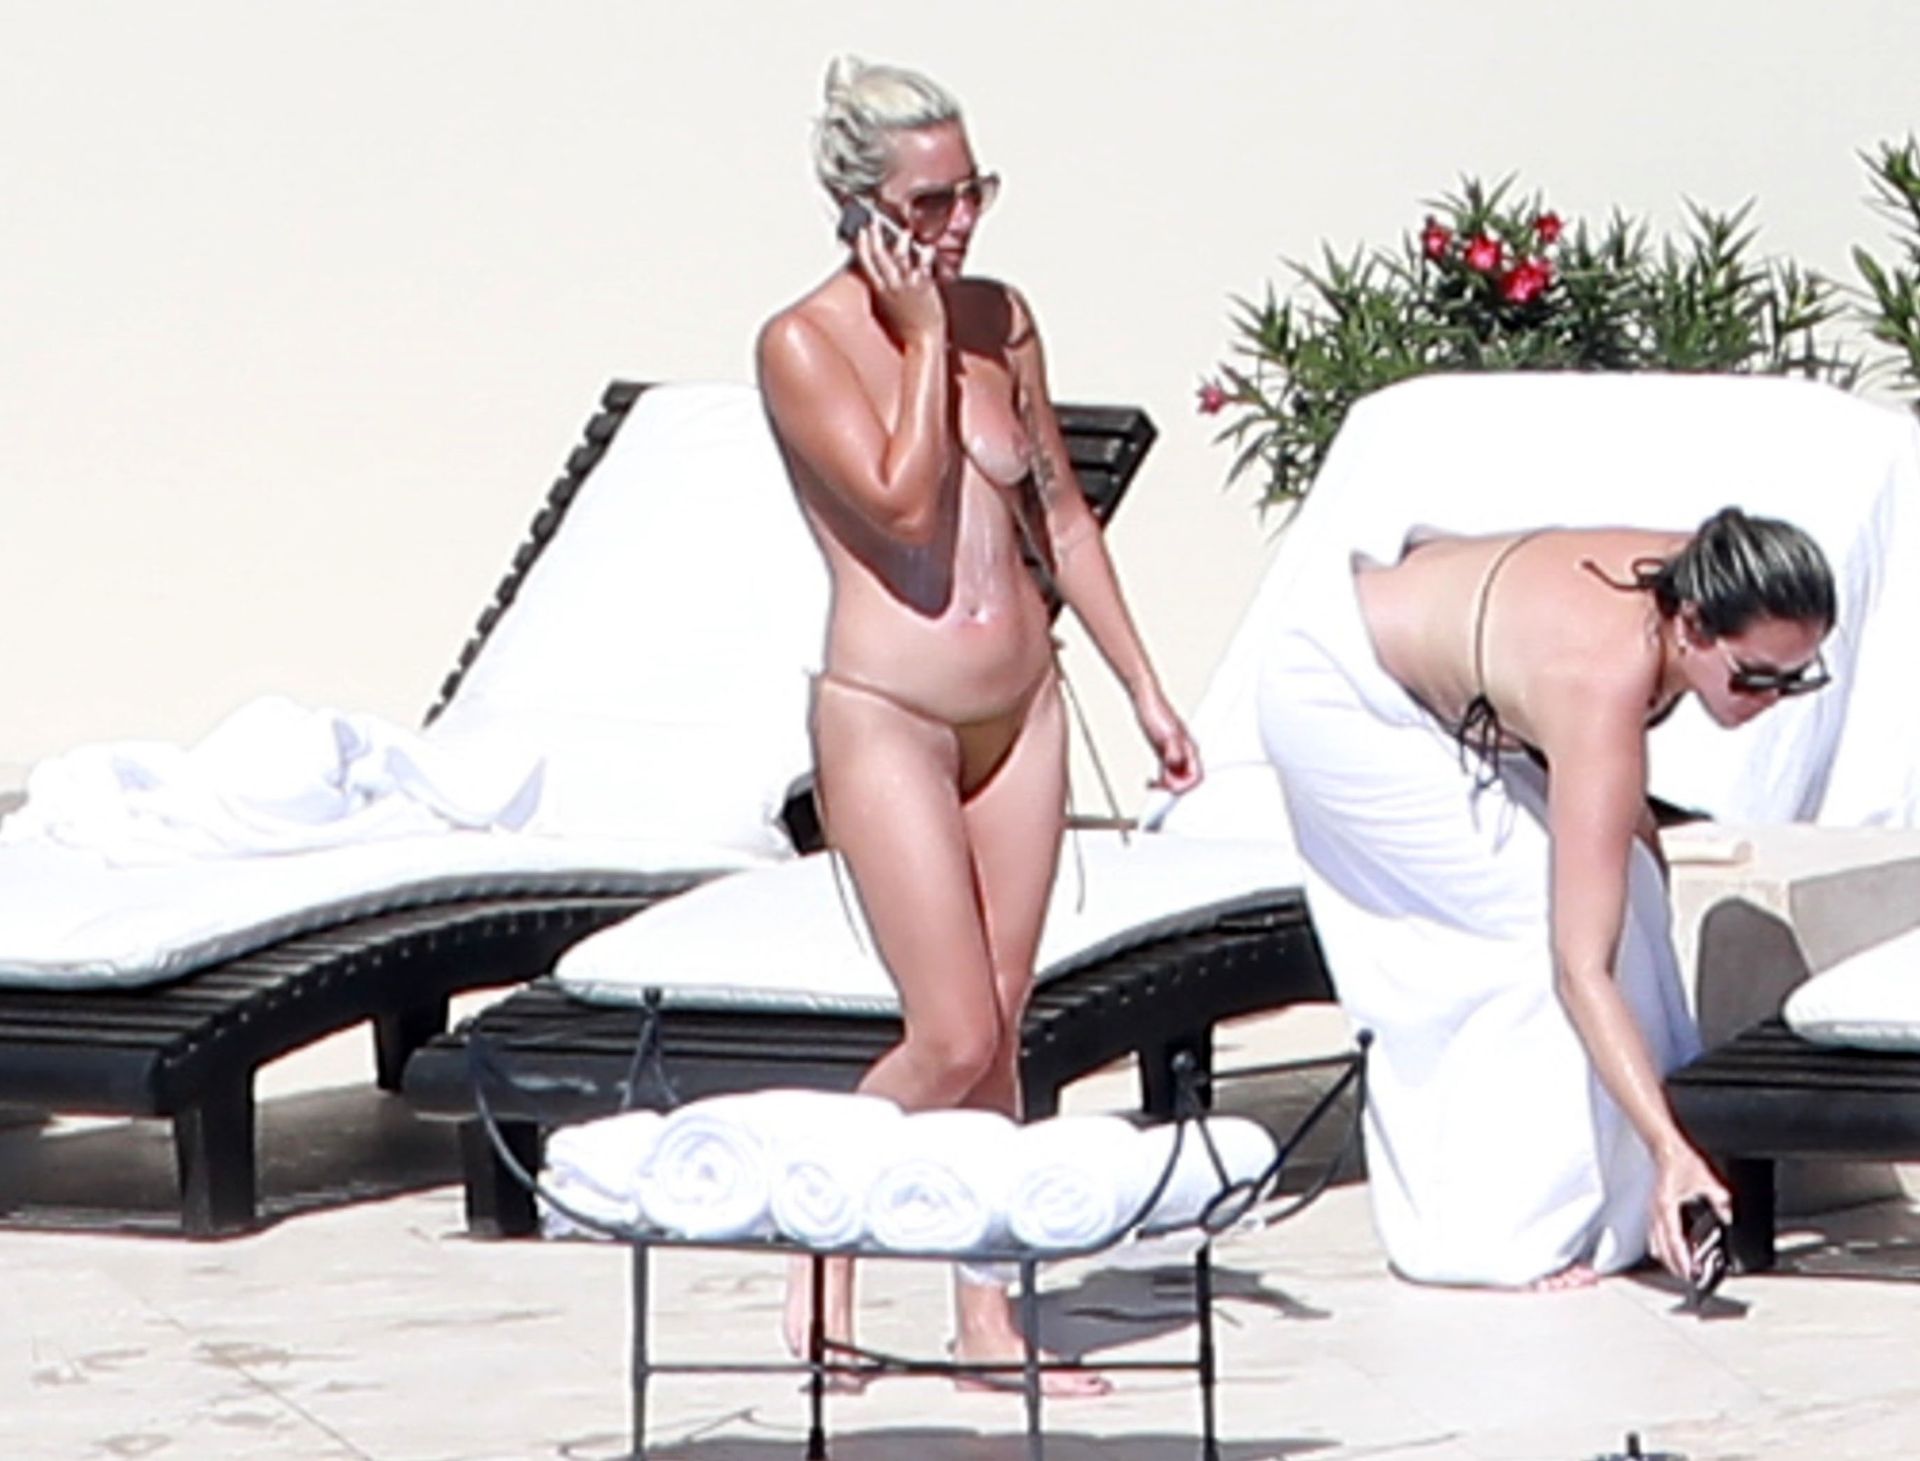 Изображение LG (4) в альбоме Lady Gaga - Sunbathing Topless In Mexico, 2/14...